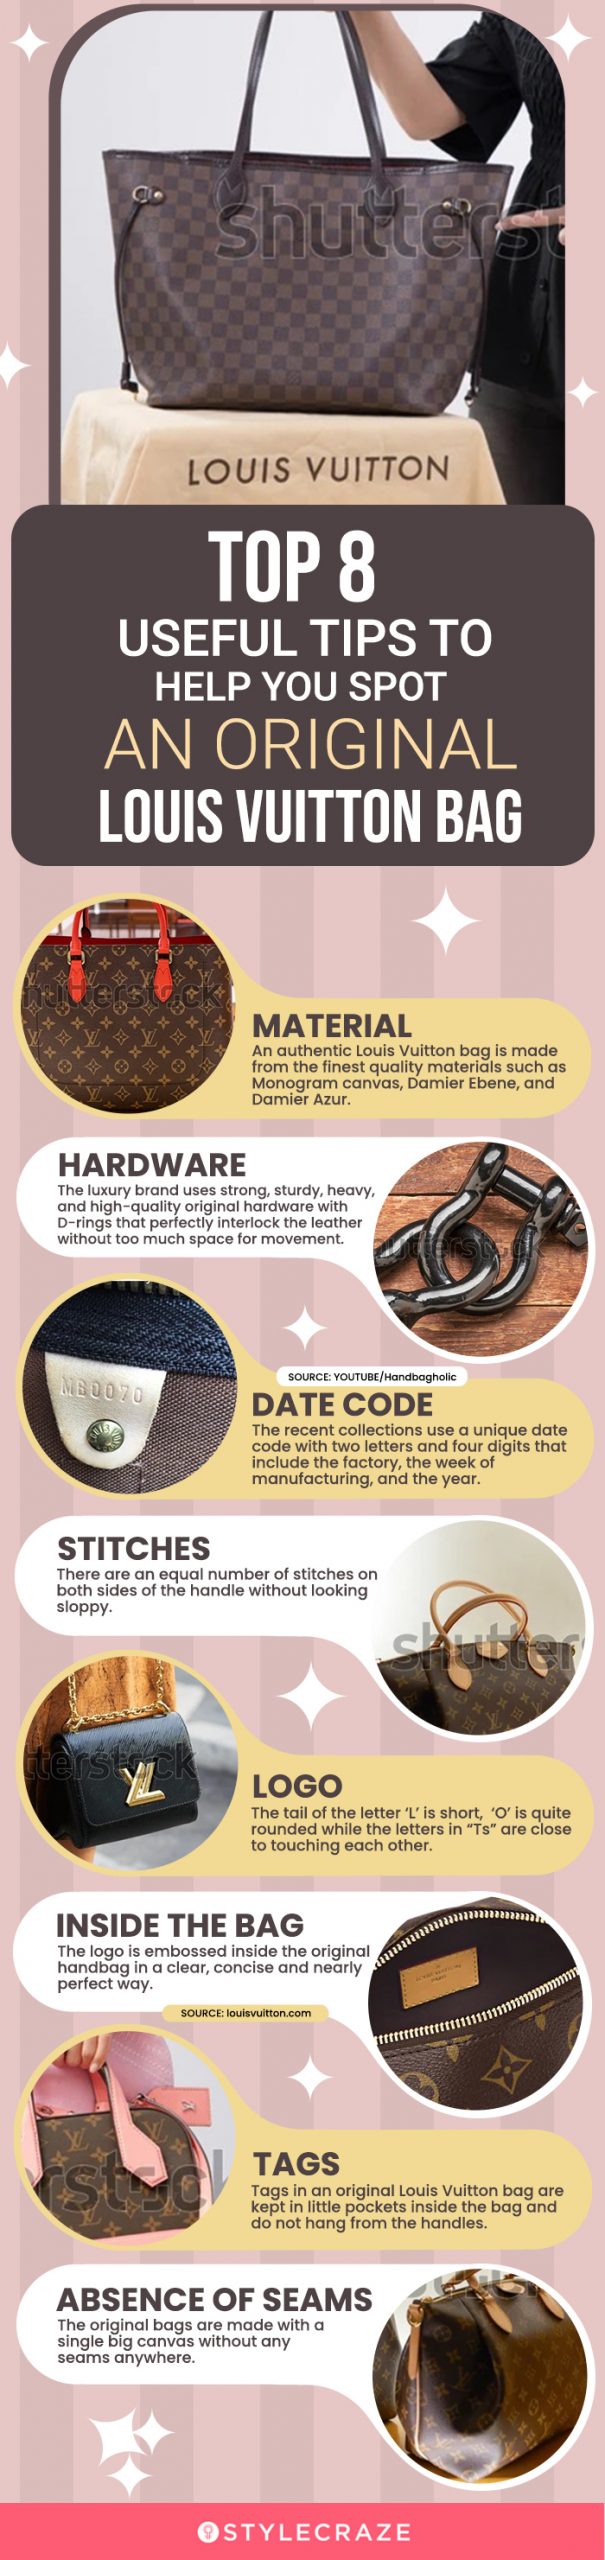 Top 8 Useful Tips To Help You Spot An Original Louis Vuitton Bag (infographic)